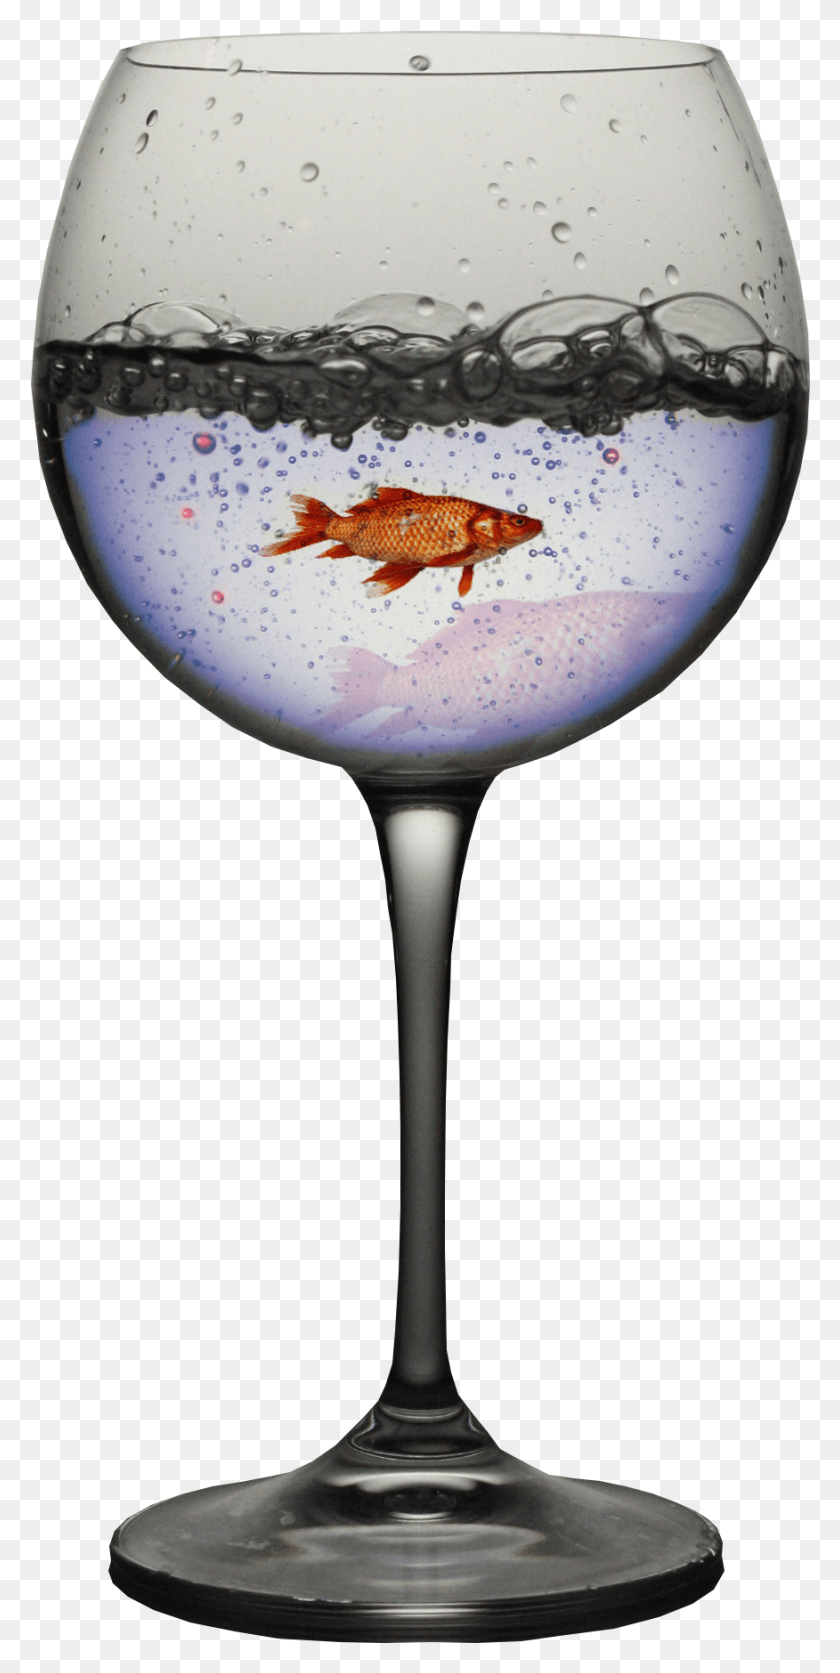 876x1812 Free Stock Photo Of Blue Water Cute Fish Fish In Wine Glass, Glass, Goldfish, Animal Hd Png Скачать